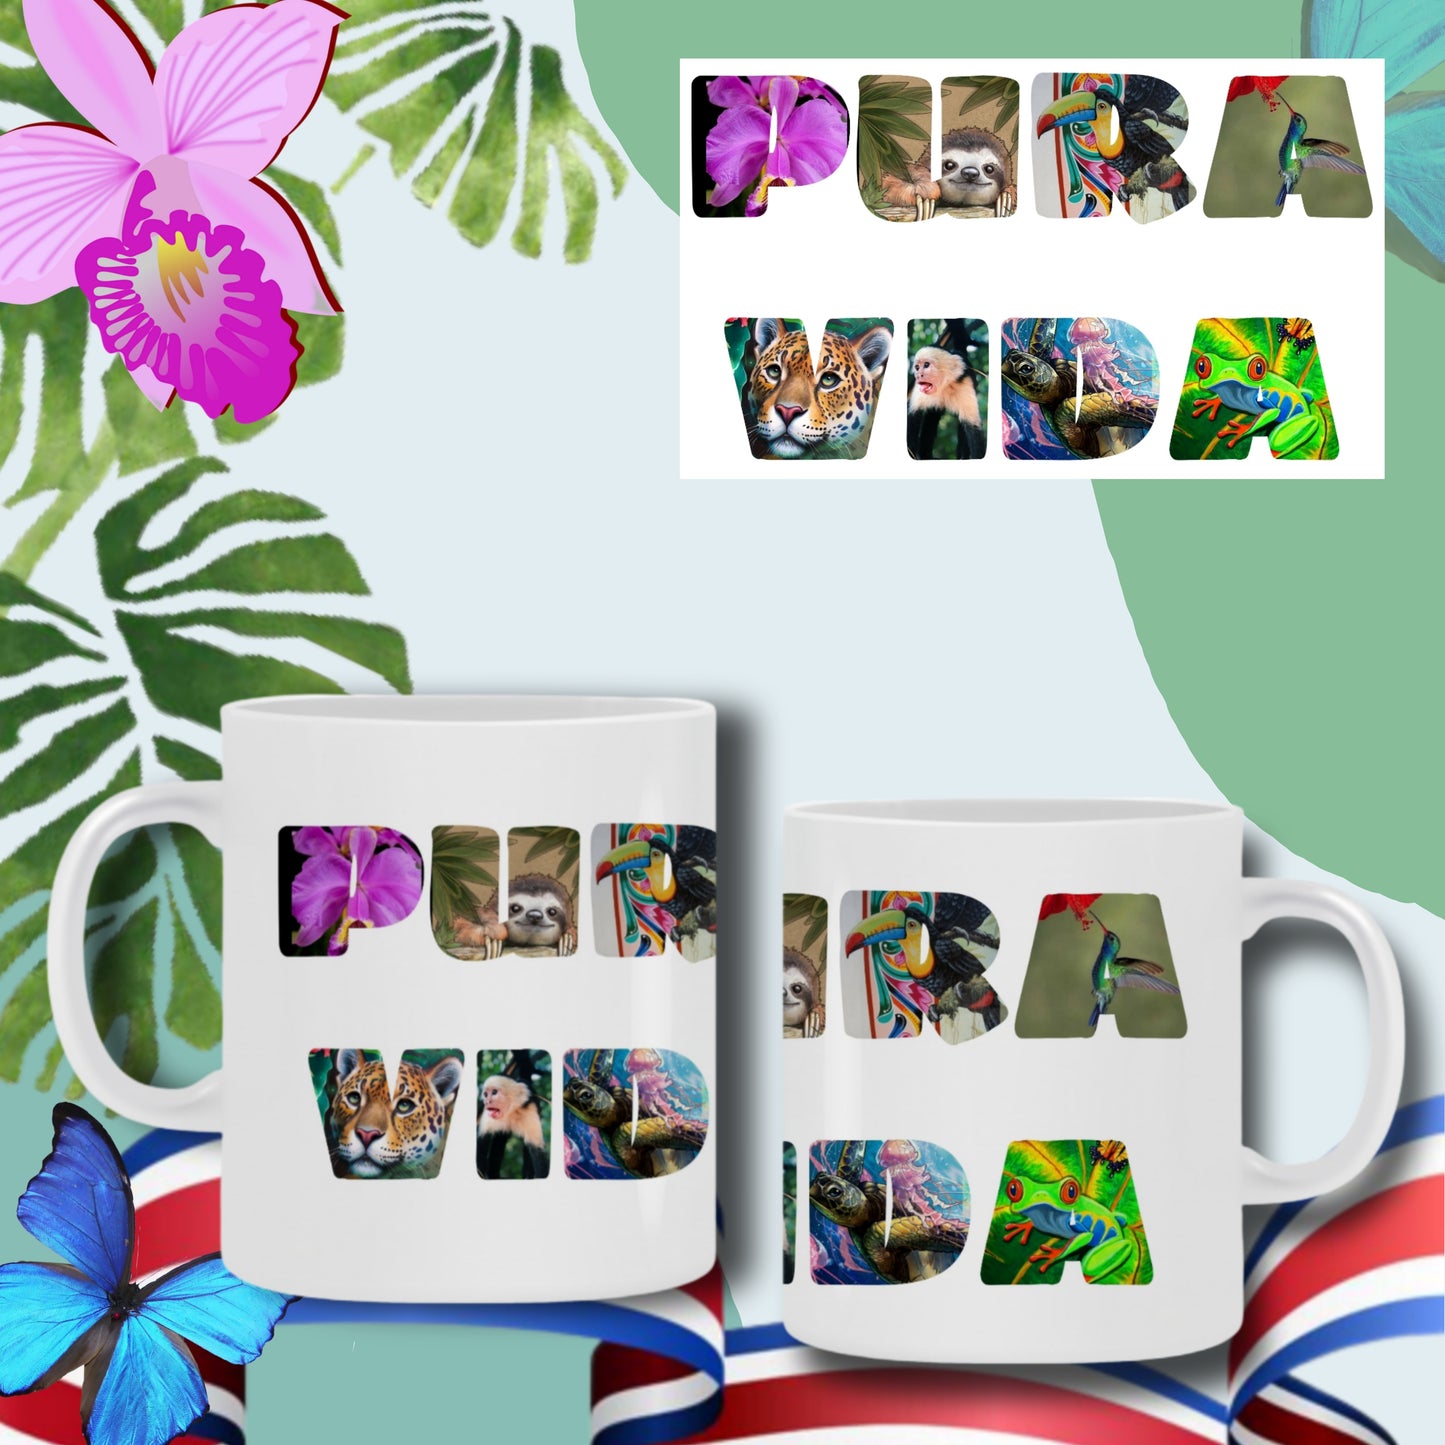 Pura Vida Coffee mug